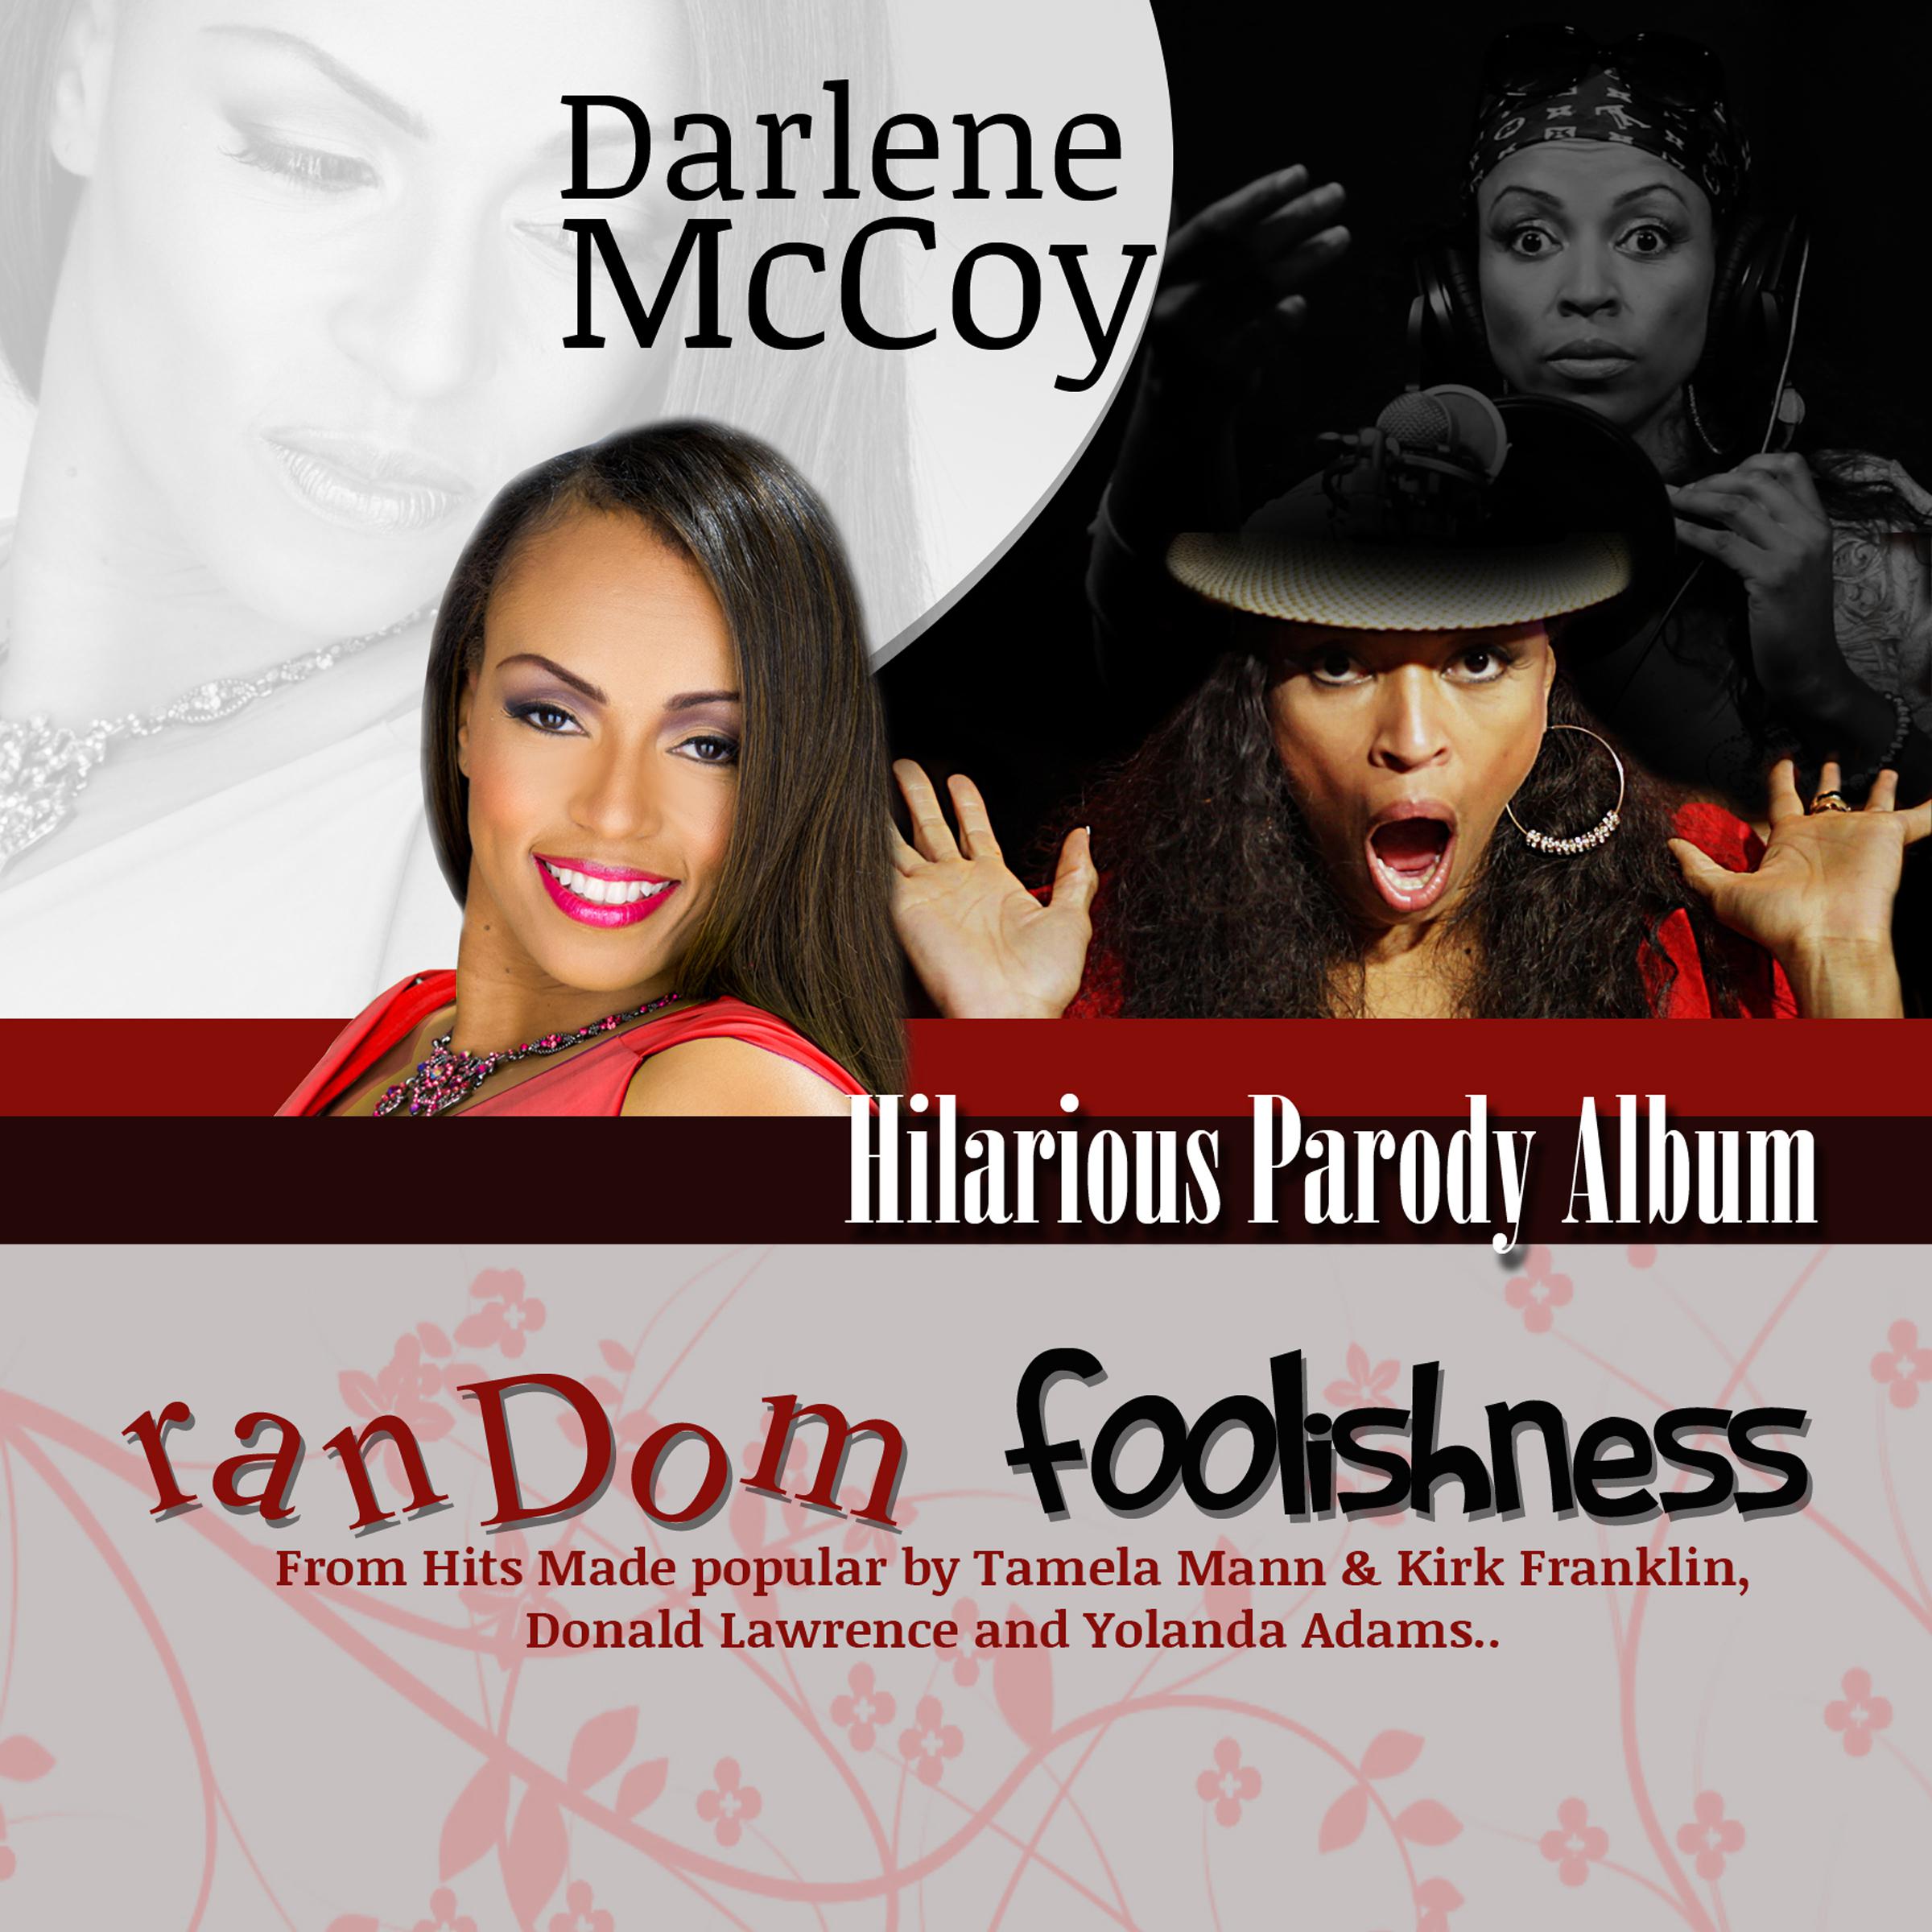 Darlene Mccoy - My Check (Interlude)